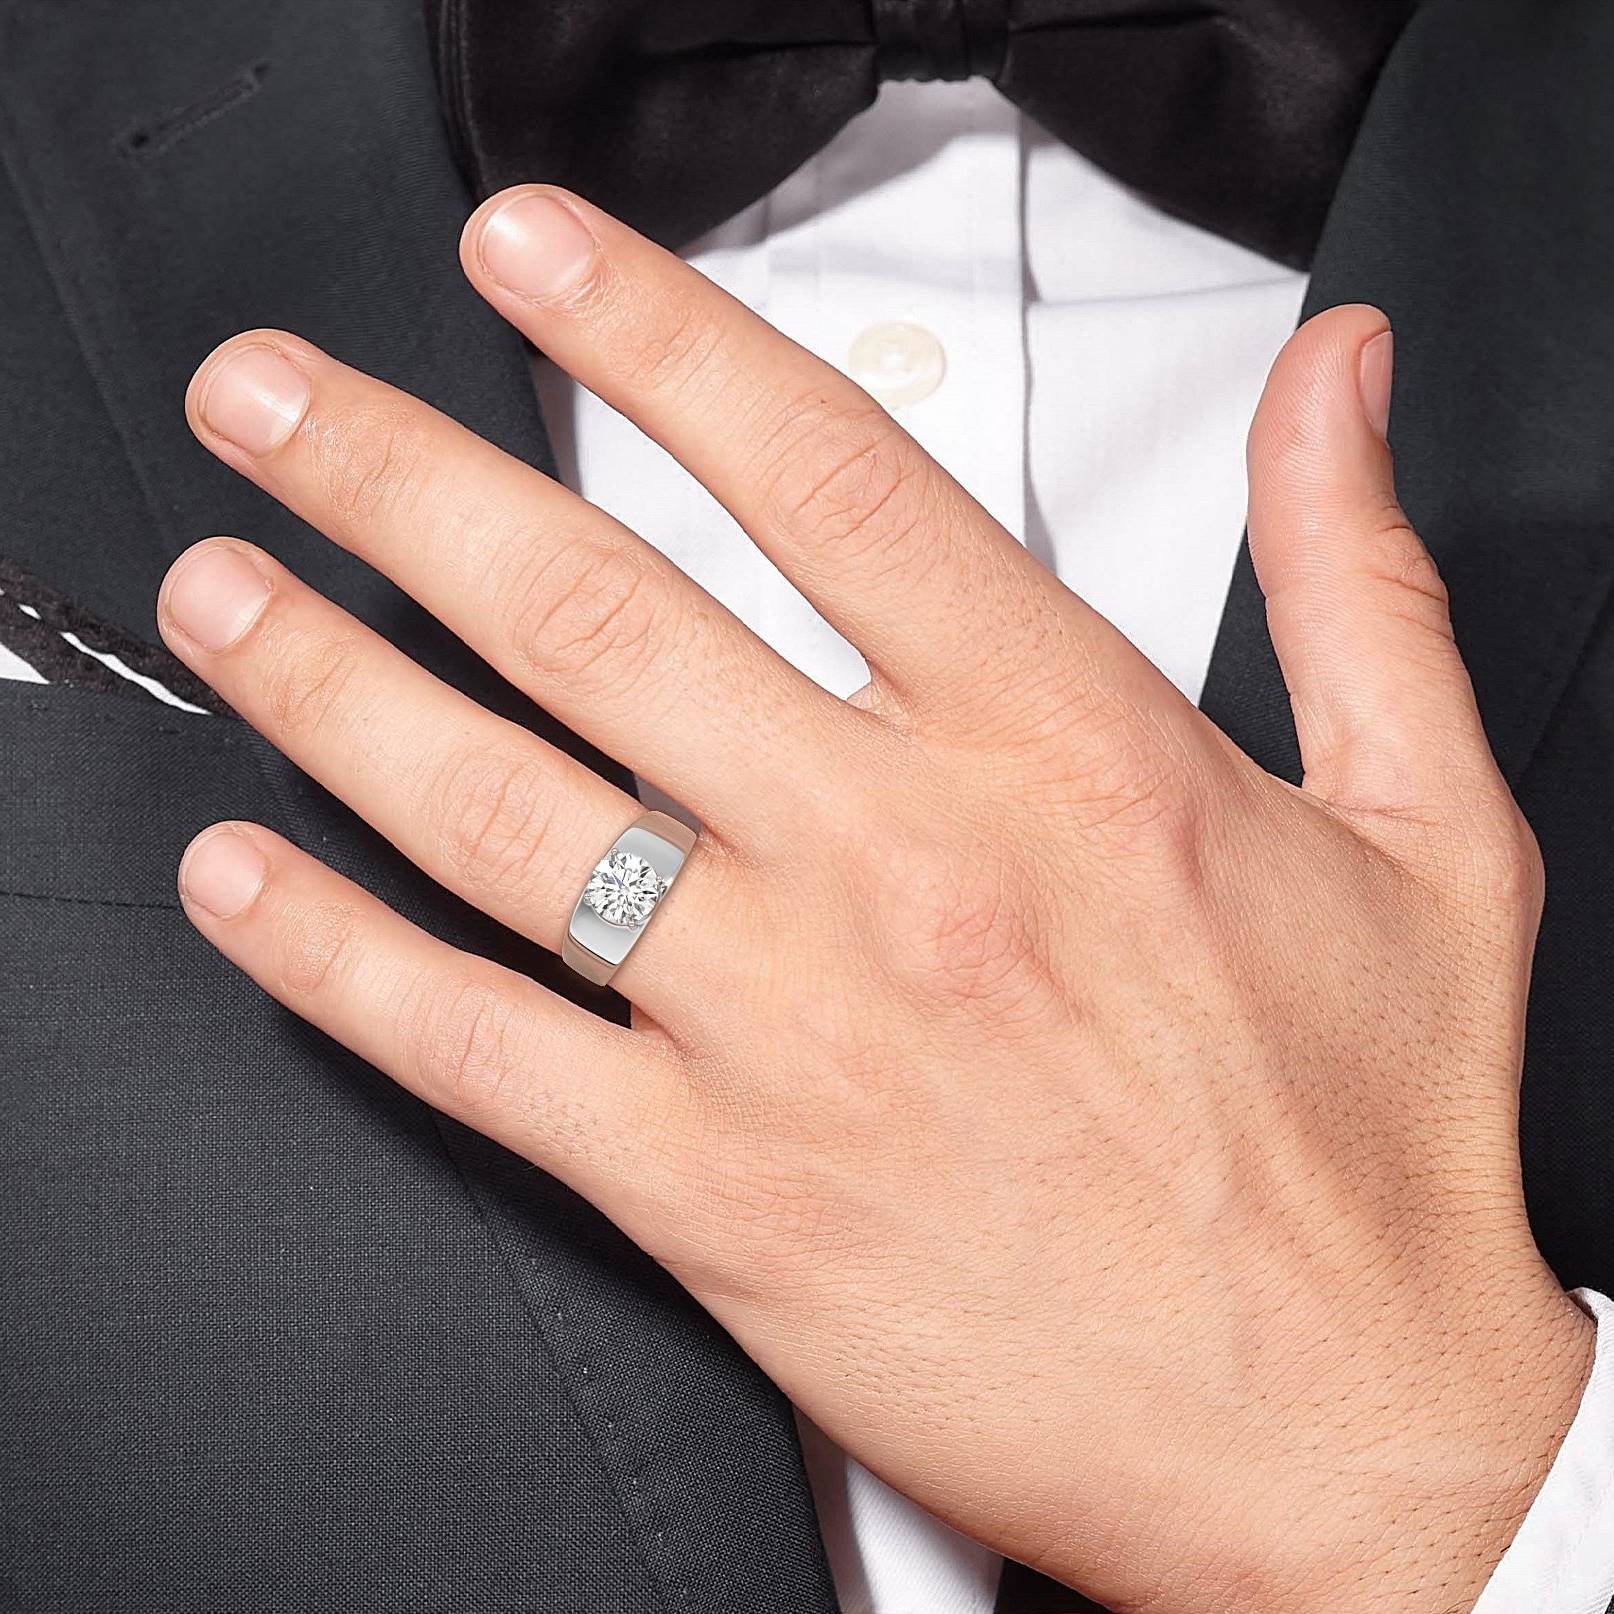 Myza 3-Carat Sterling Silver Men's Ring - Elegant Luxury for Men's Hand